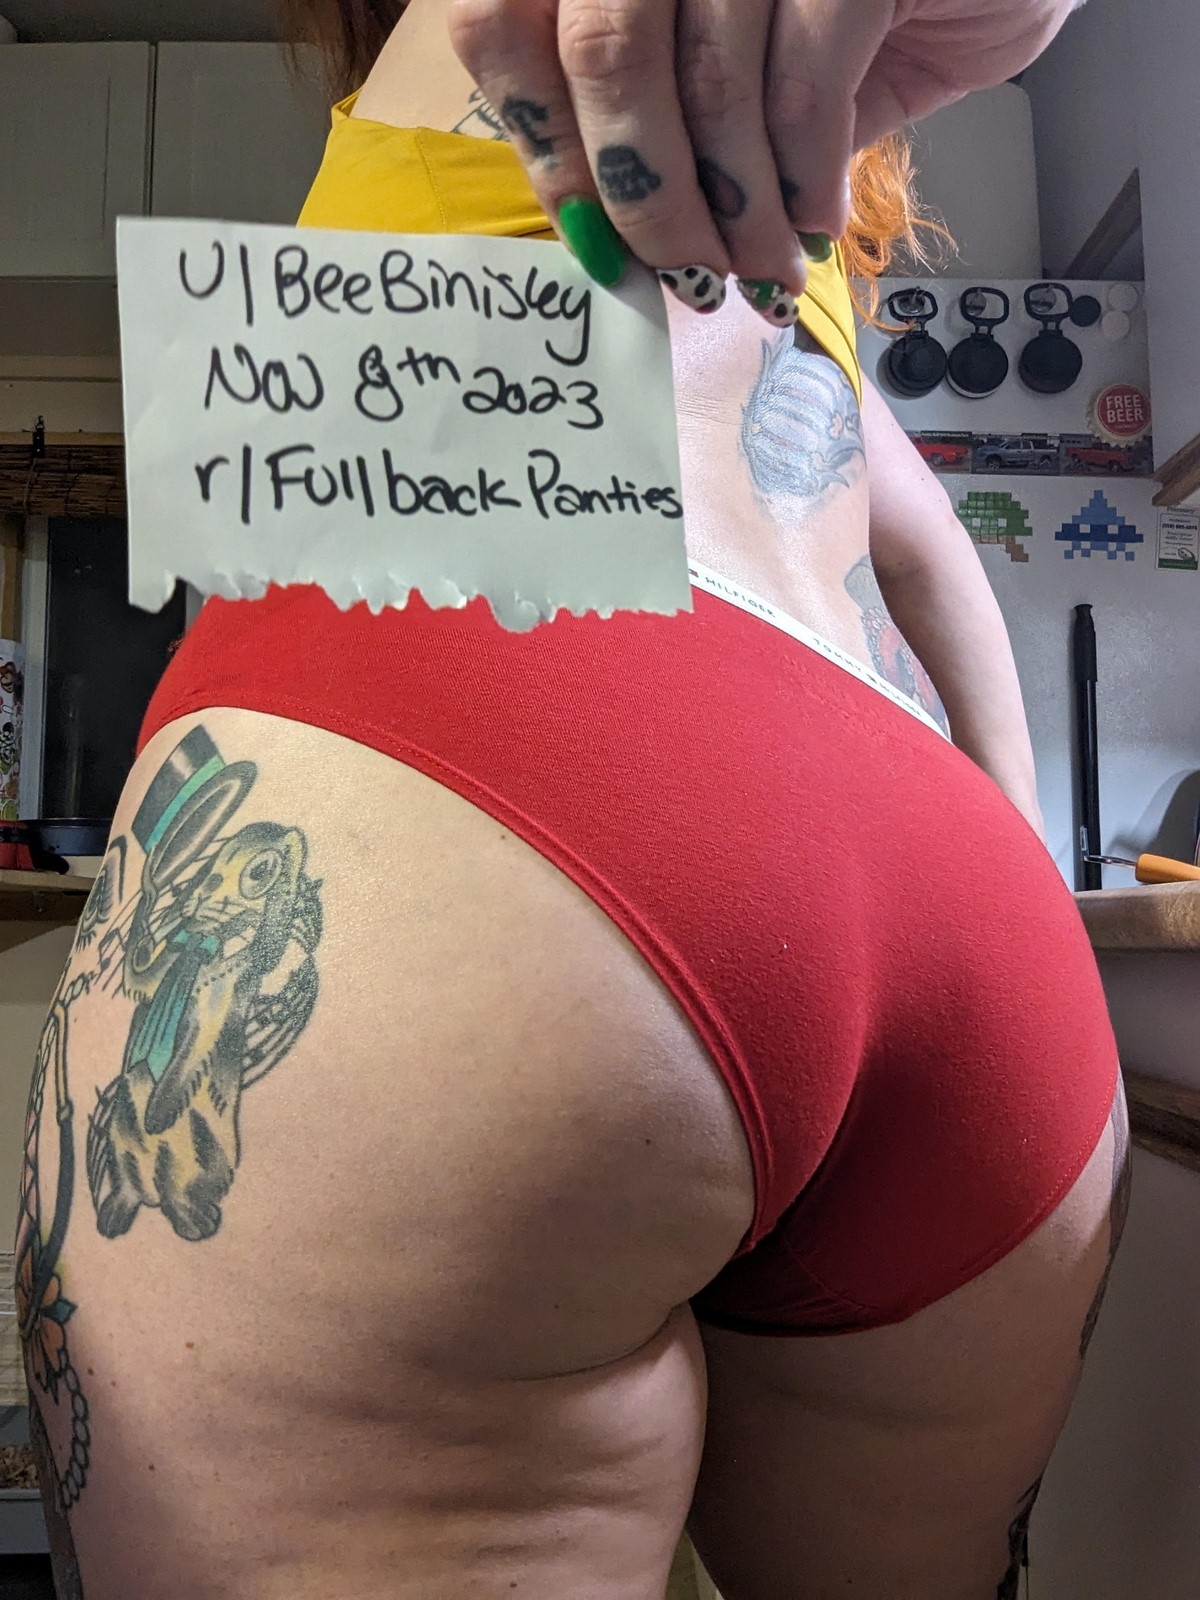 Does anyone like nude panties? : r/FullBackPanties